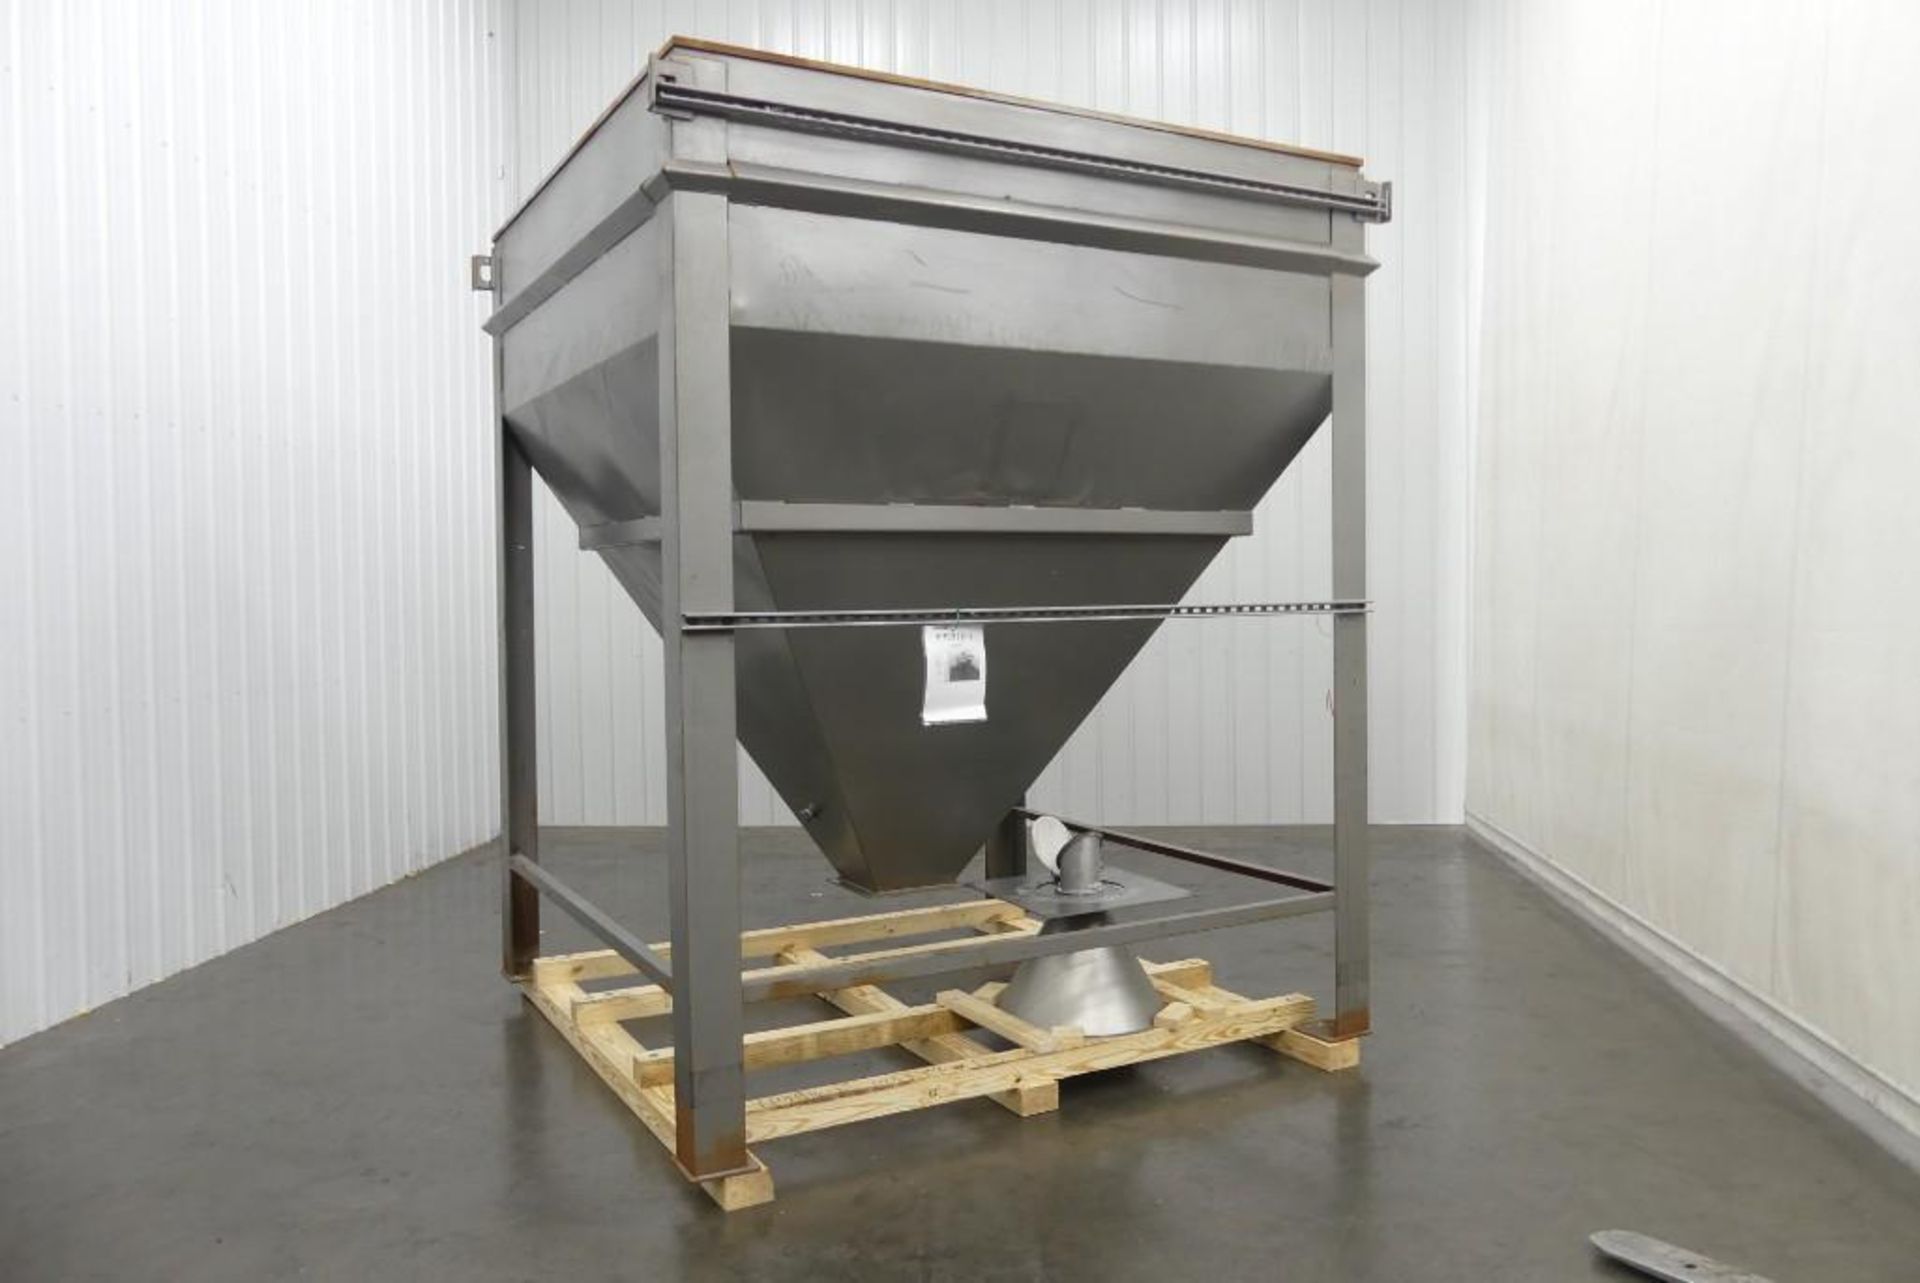 Mild Steel Hopper 280 Cubic Feet Capacity - Image 9 of 9